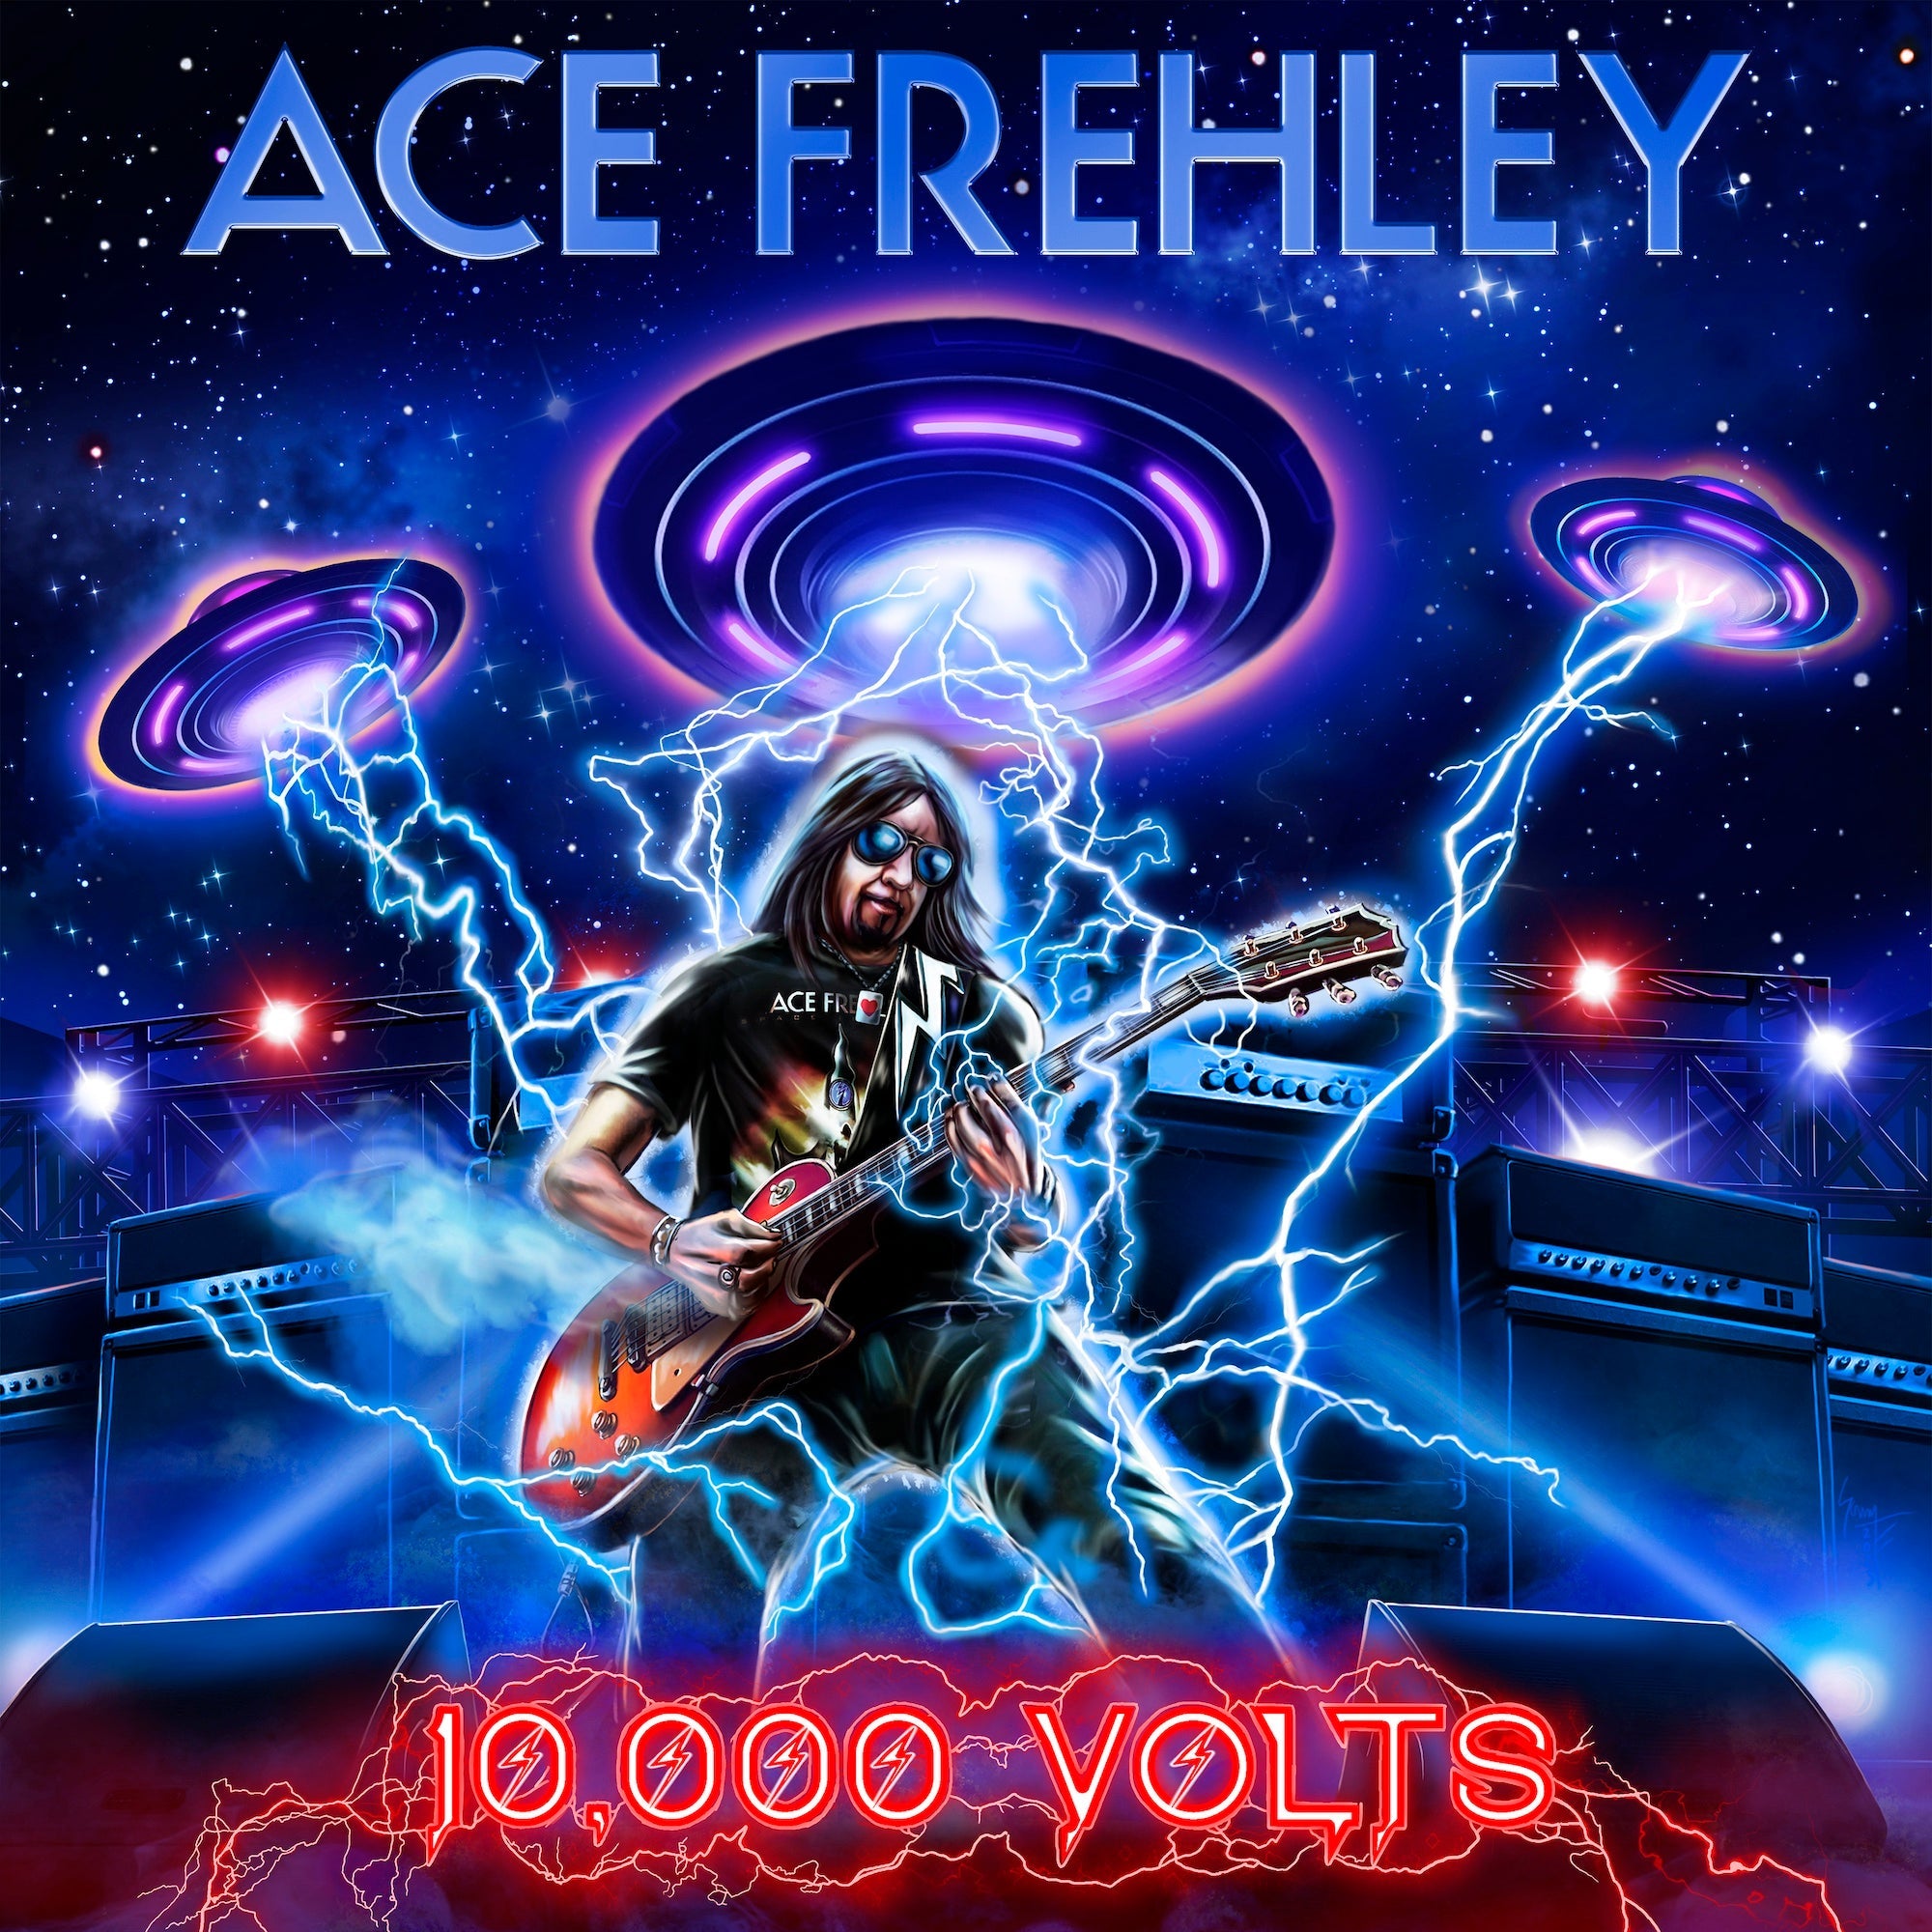 ACE FREHLEY ANNOUNCES NEW '10,000 VOLTS' ALBUM MNRK Heavy